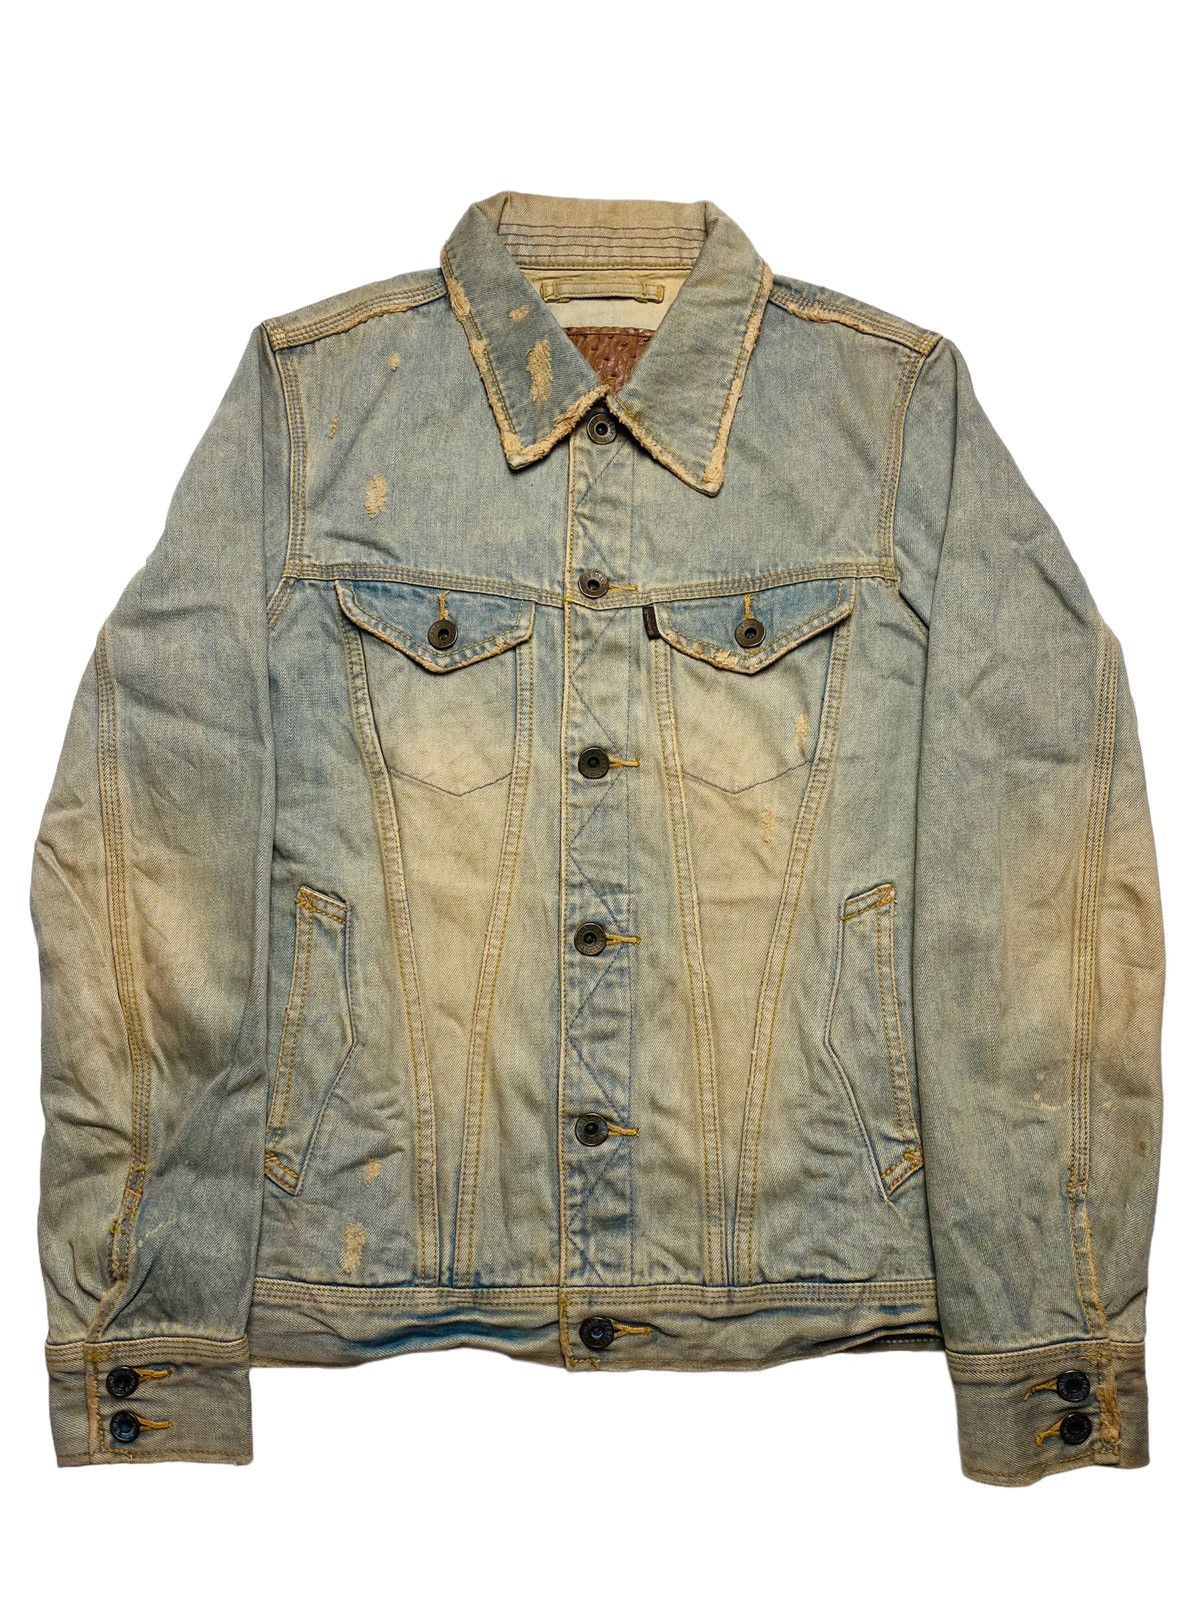 00s L.G.B. archive HDWASH DENIM jacket②古着購入後試着のみです